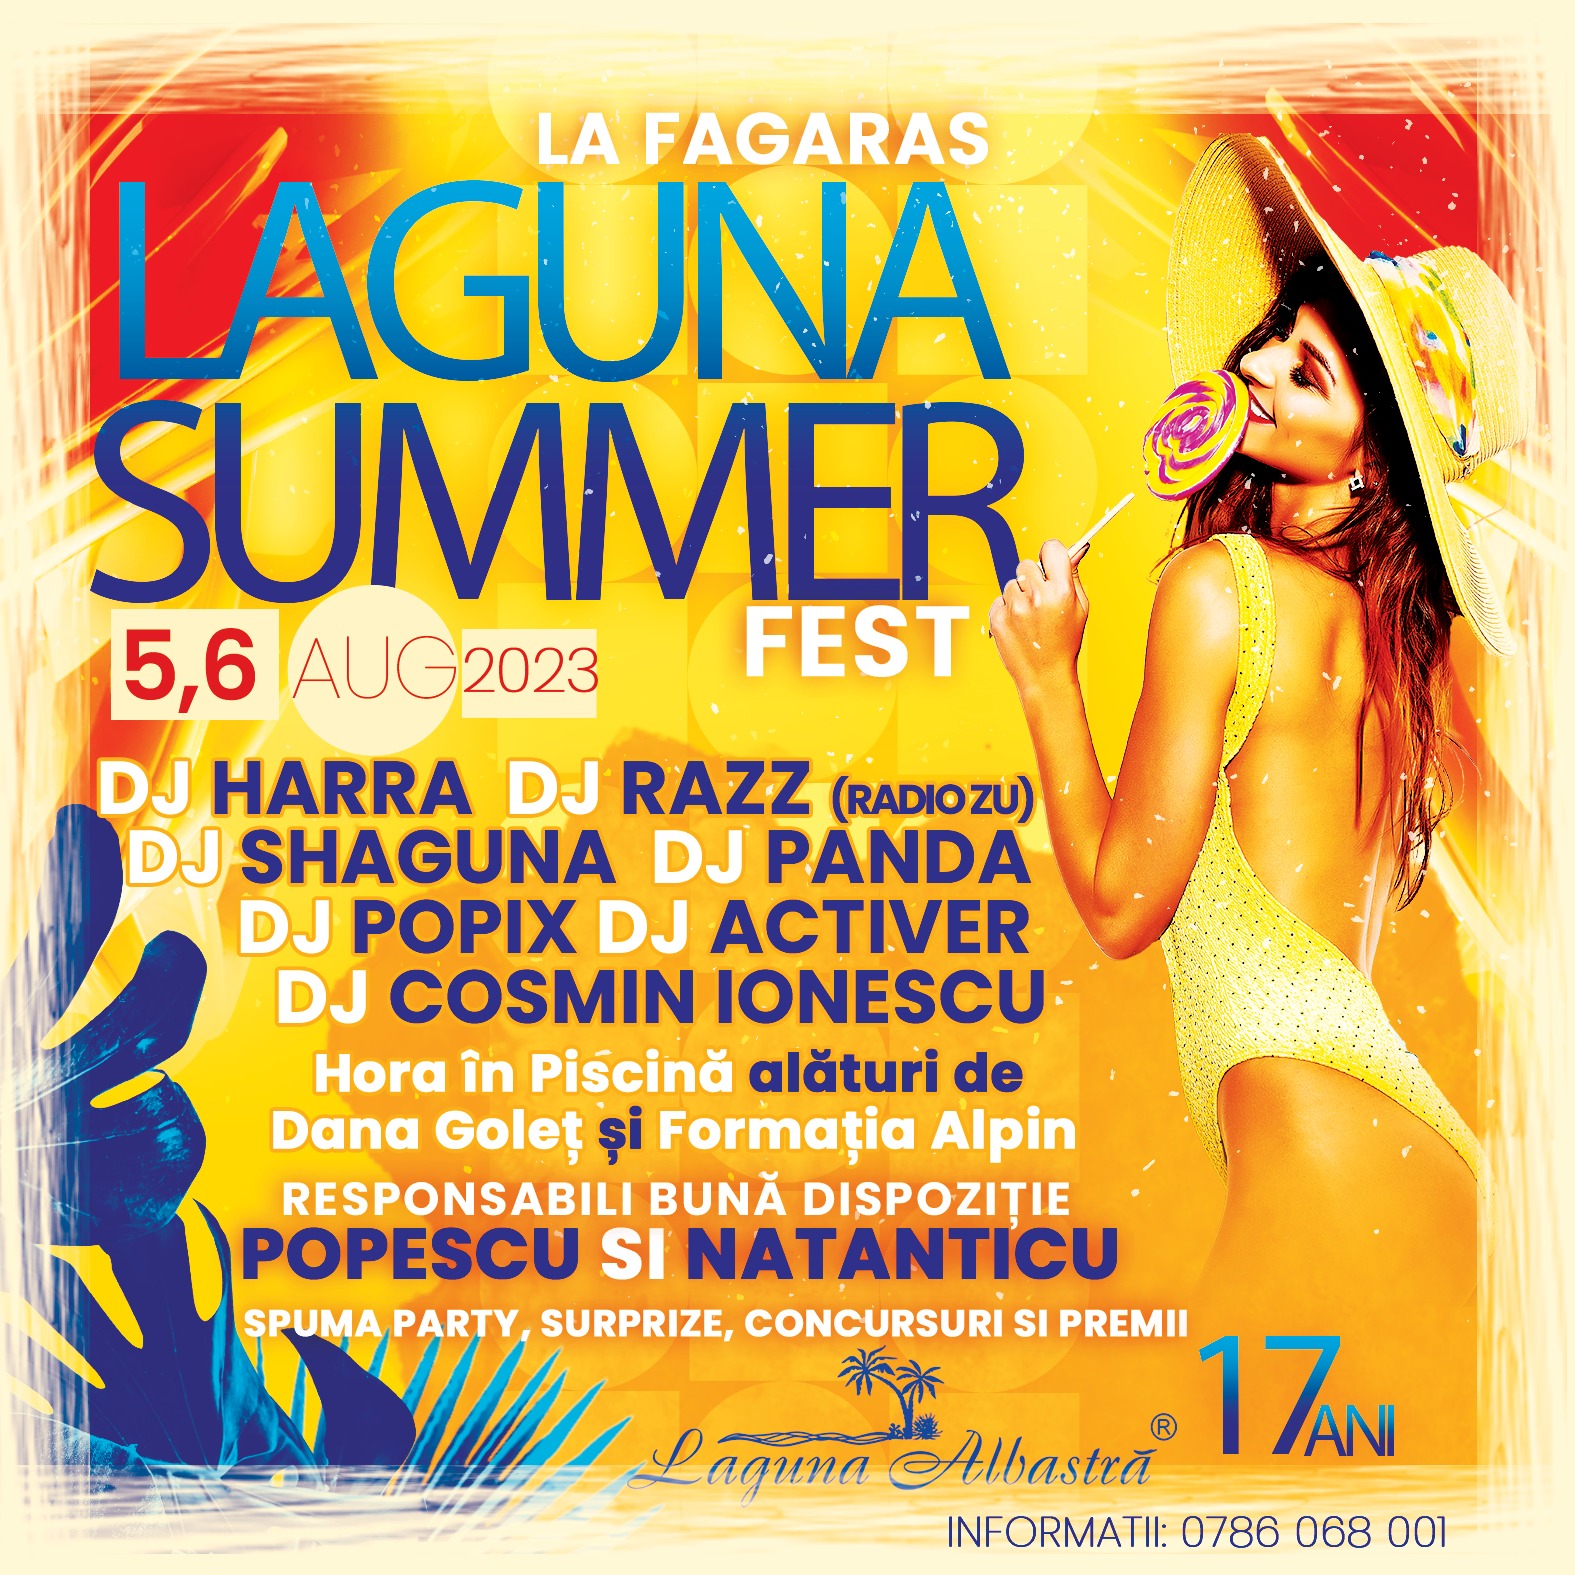 LAGUNA SUMMER FEST la Fagaras - 5-6 august 2023